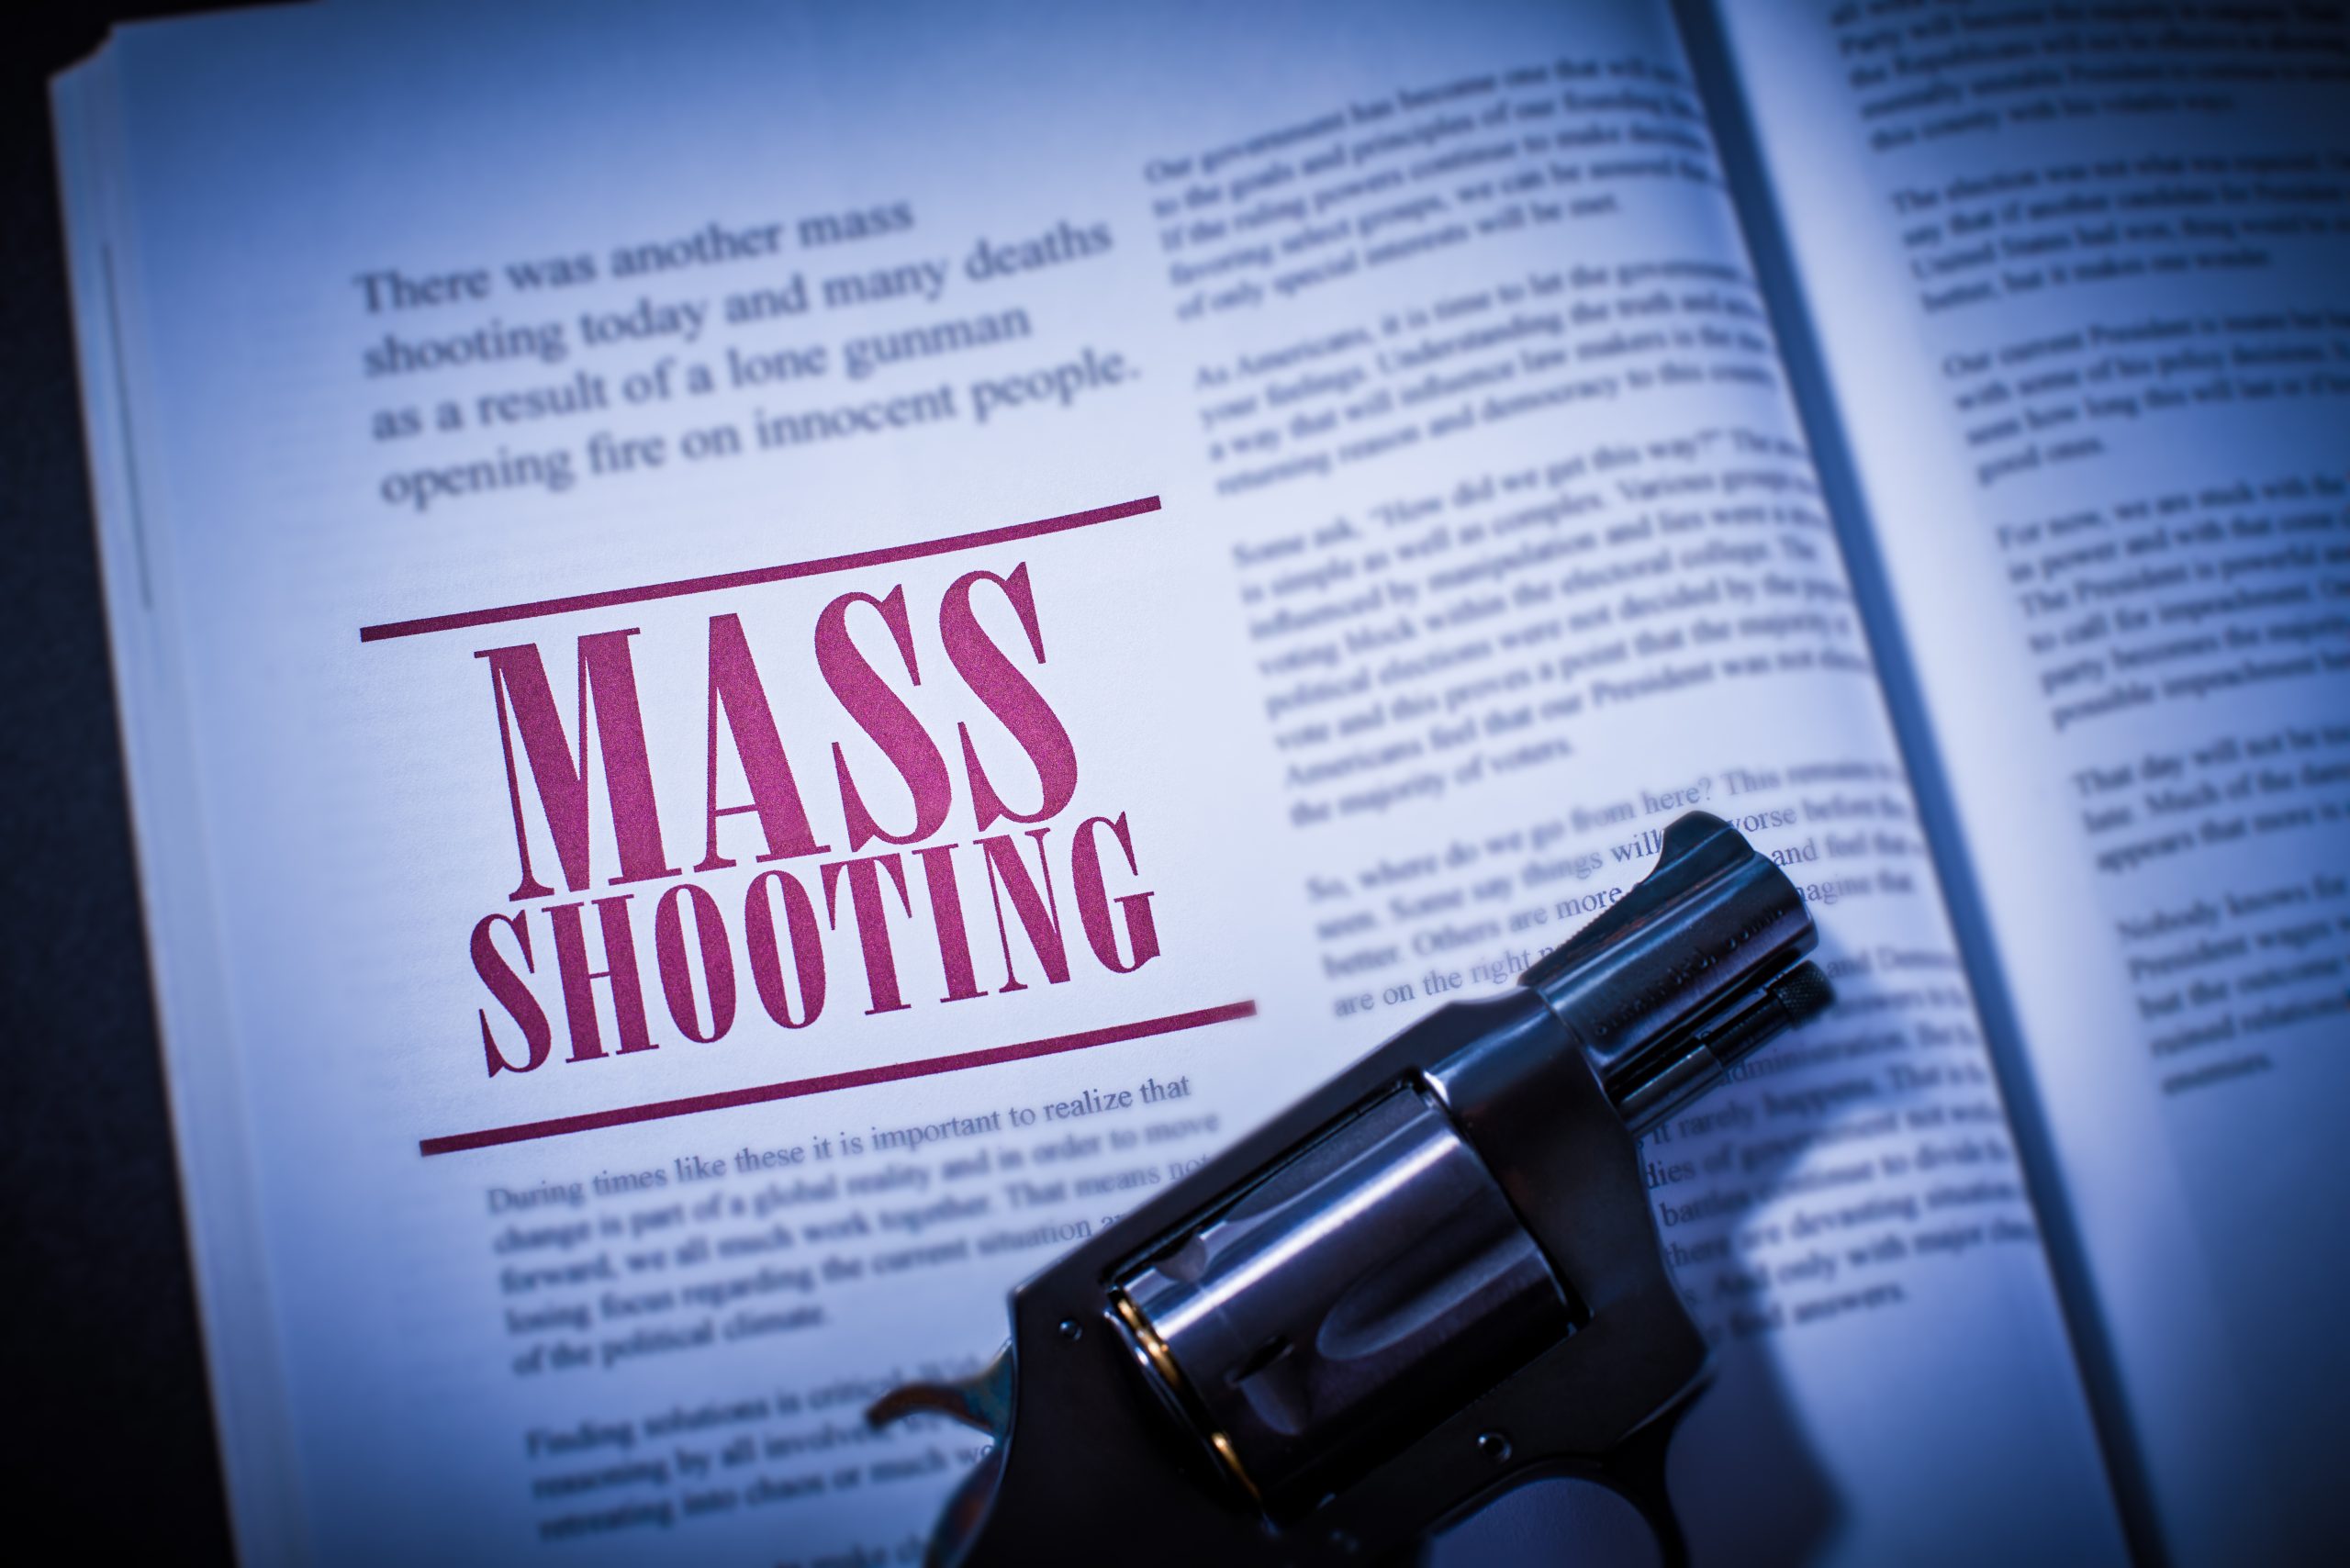 Mass shooting on magazine with gun